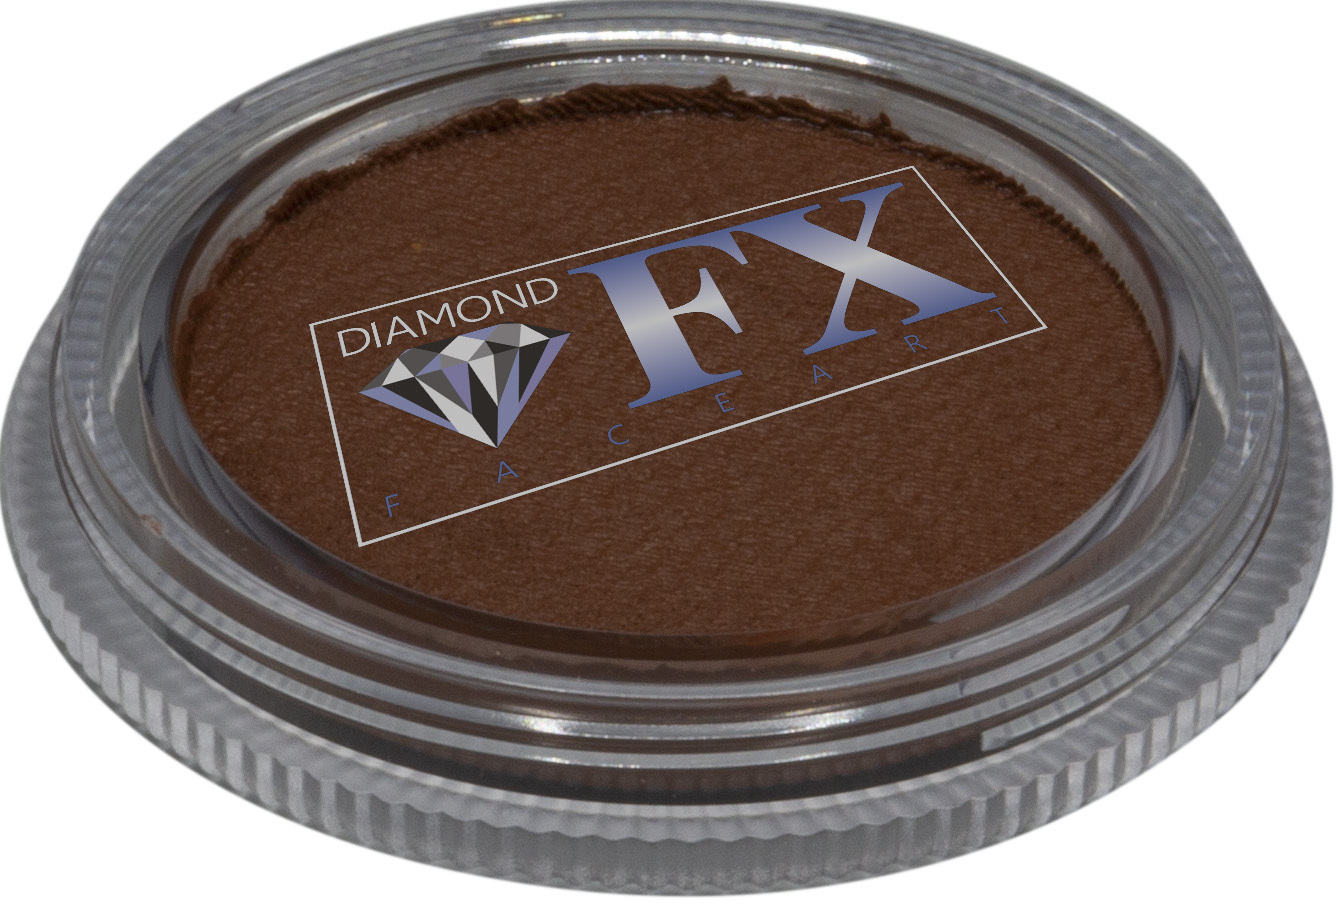 Diamond FX Brown 30g - Small Image